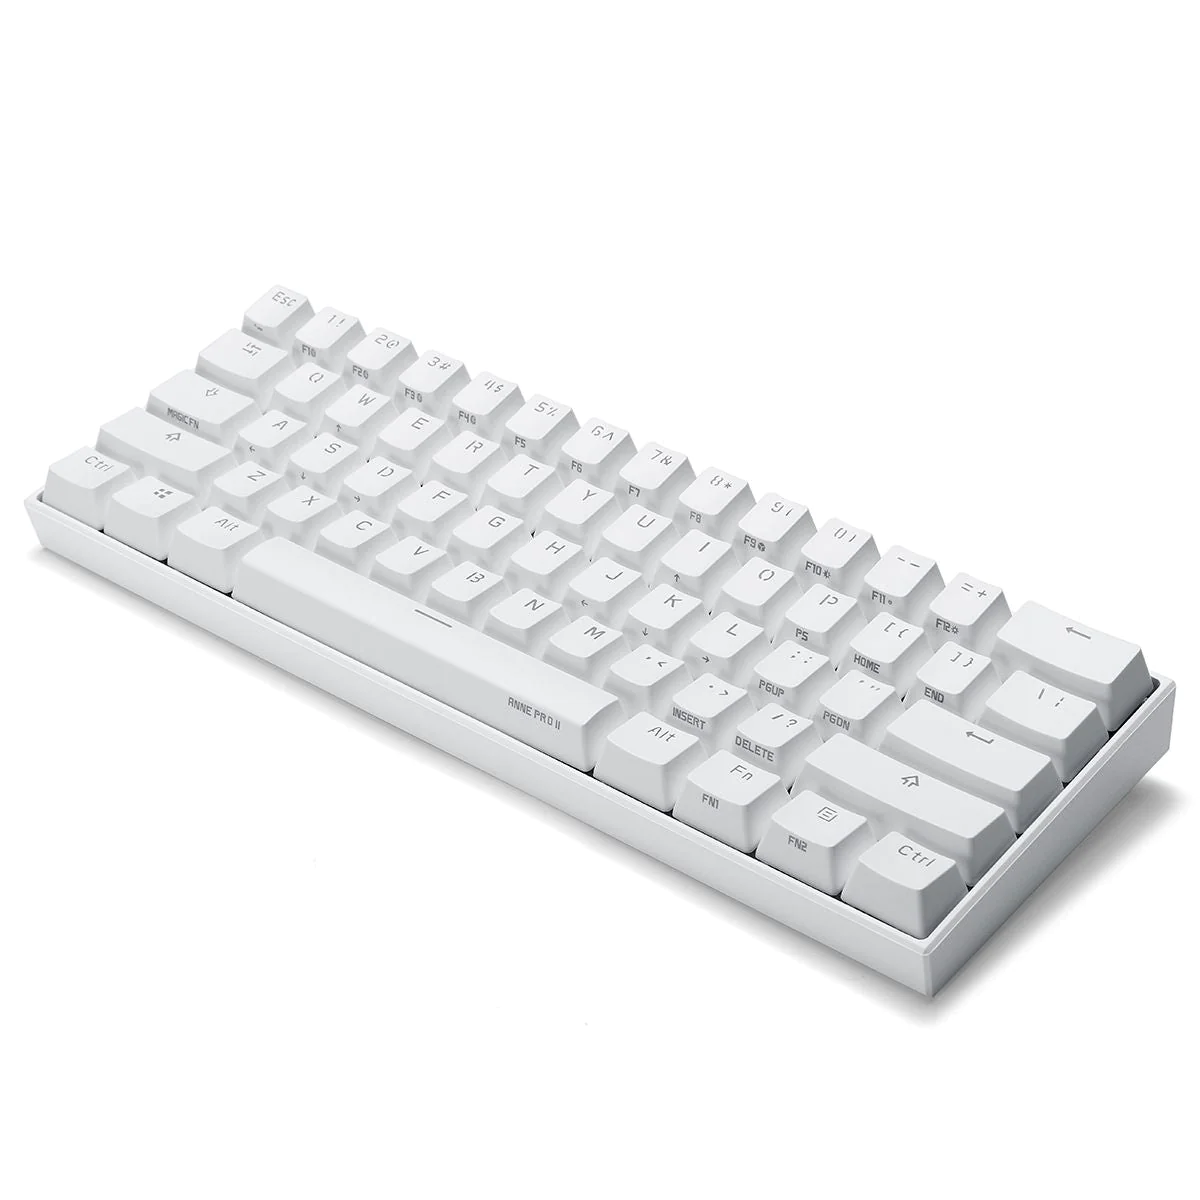 Anne Pro 2 60% Bluetooth Mechanical Keyboard - White / Gateron Pro Brown